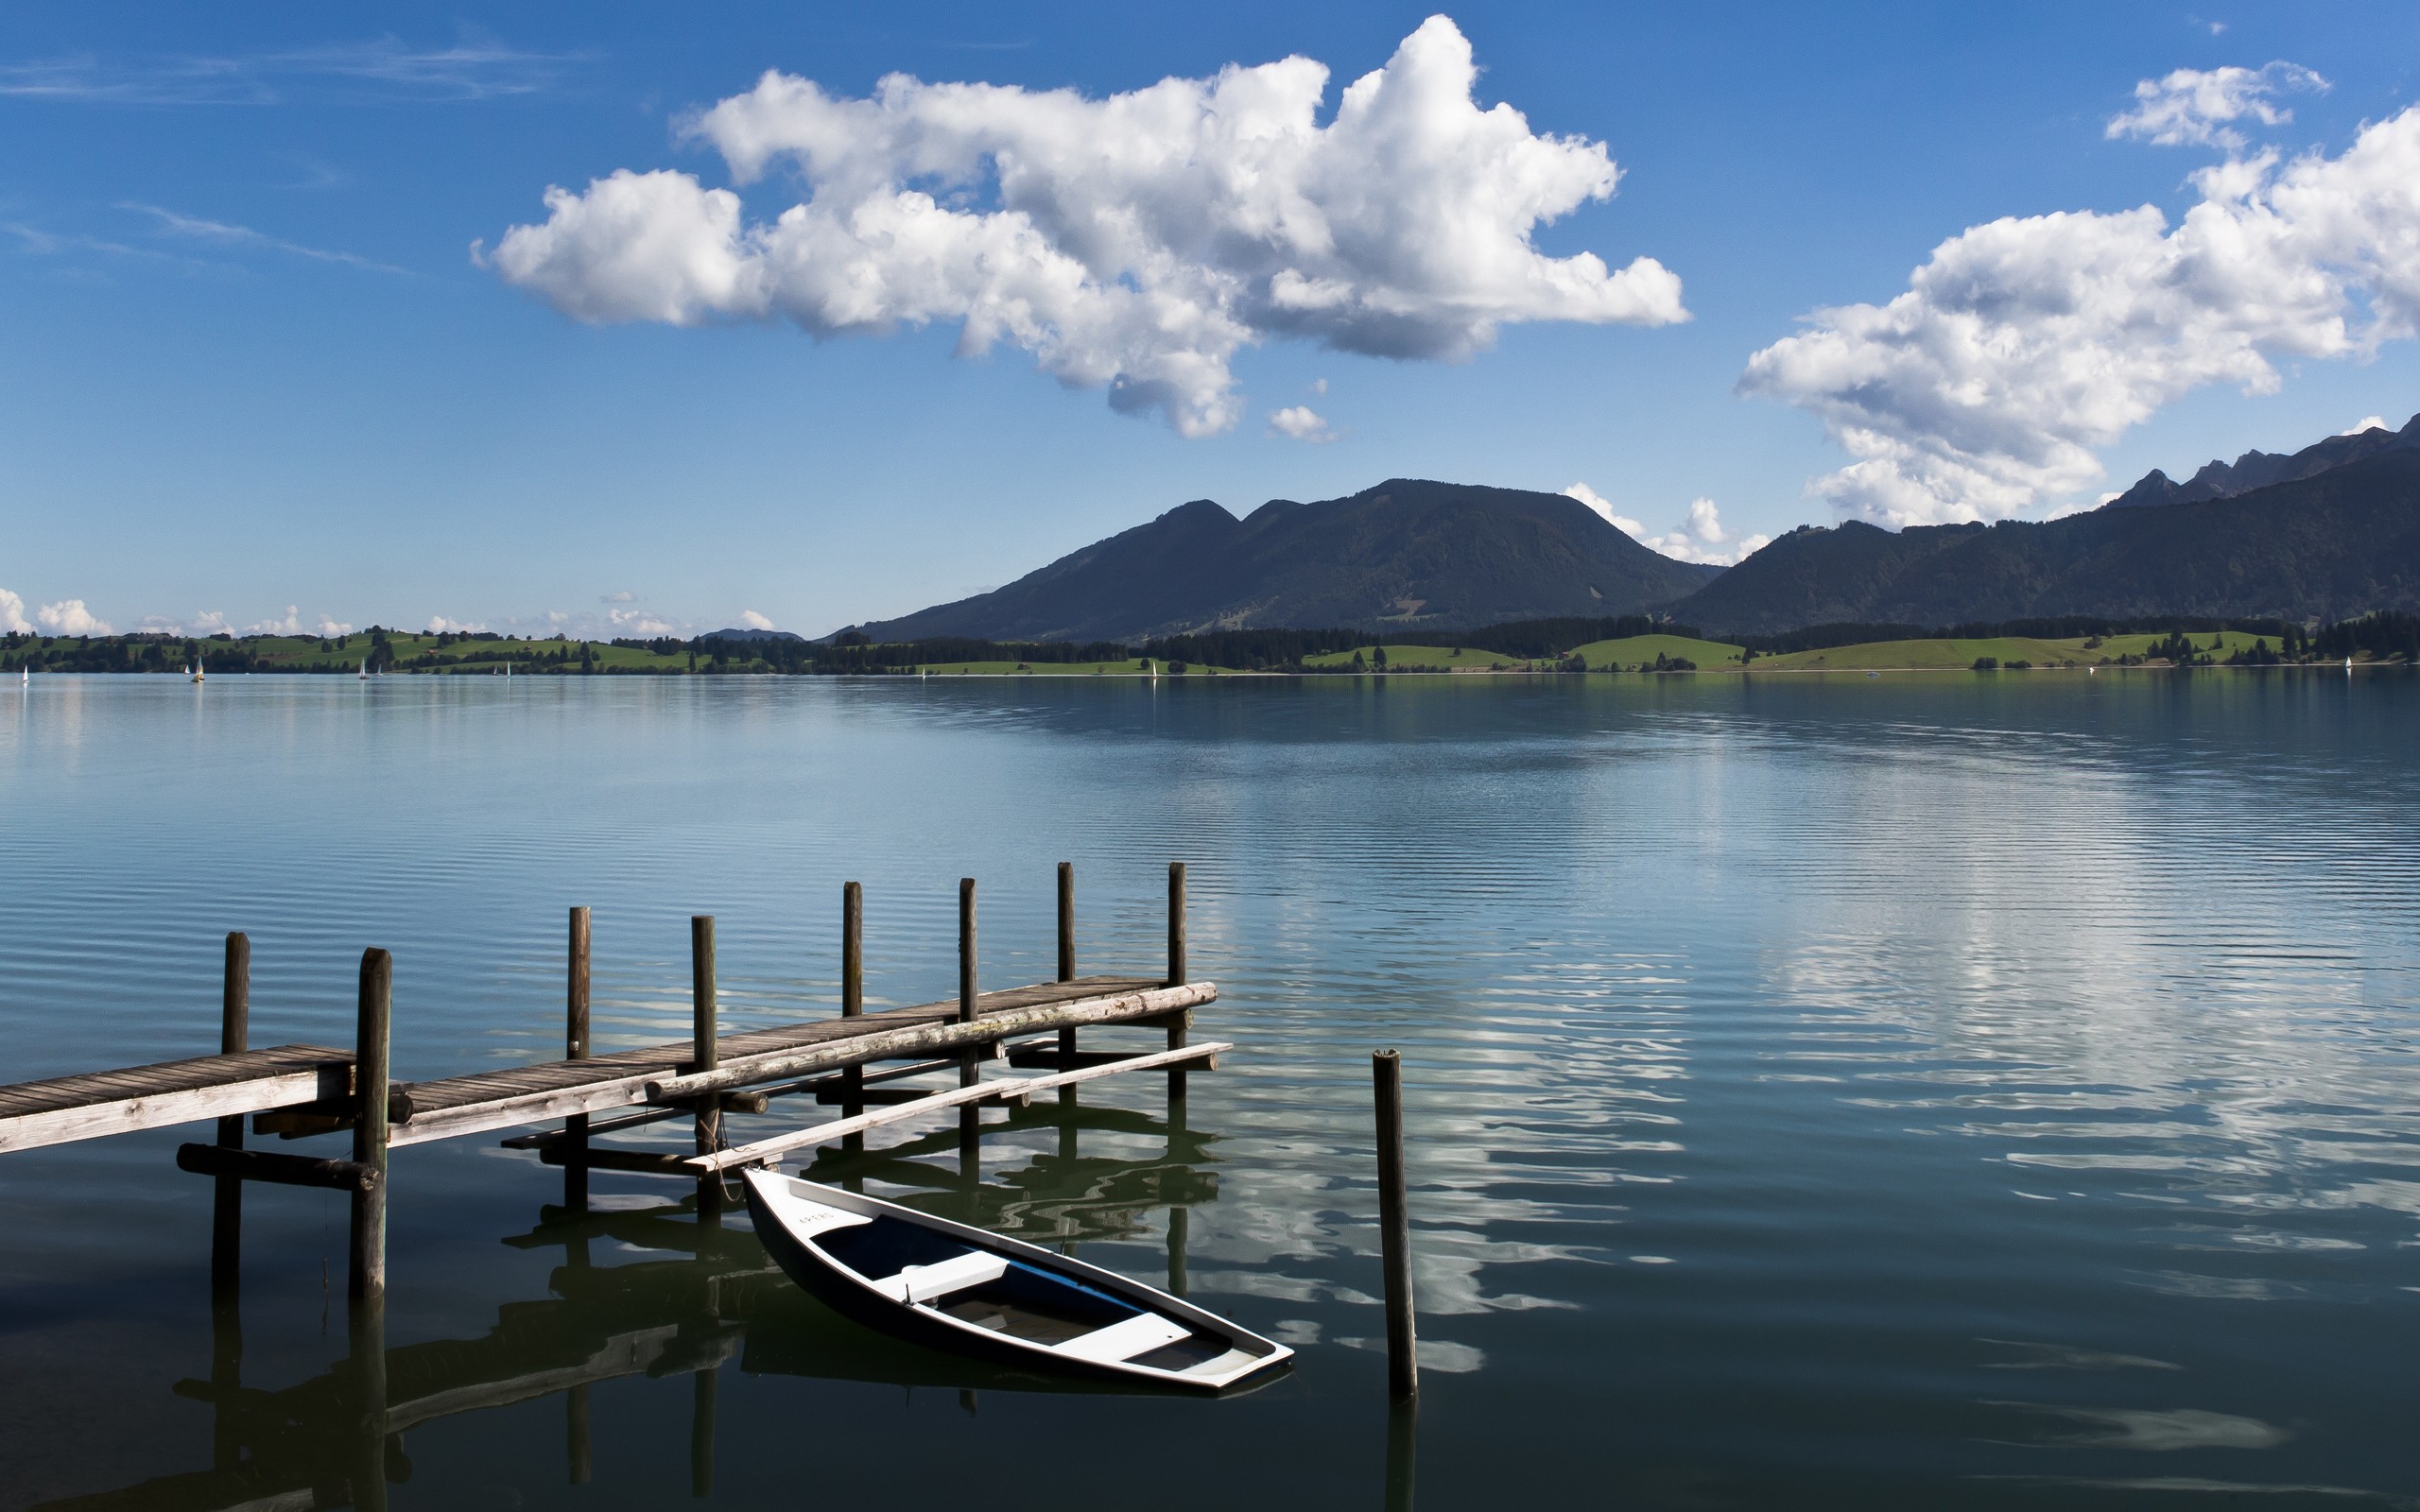 Photography of a serene lake